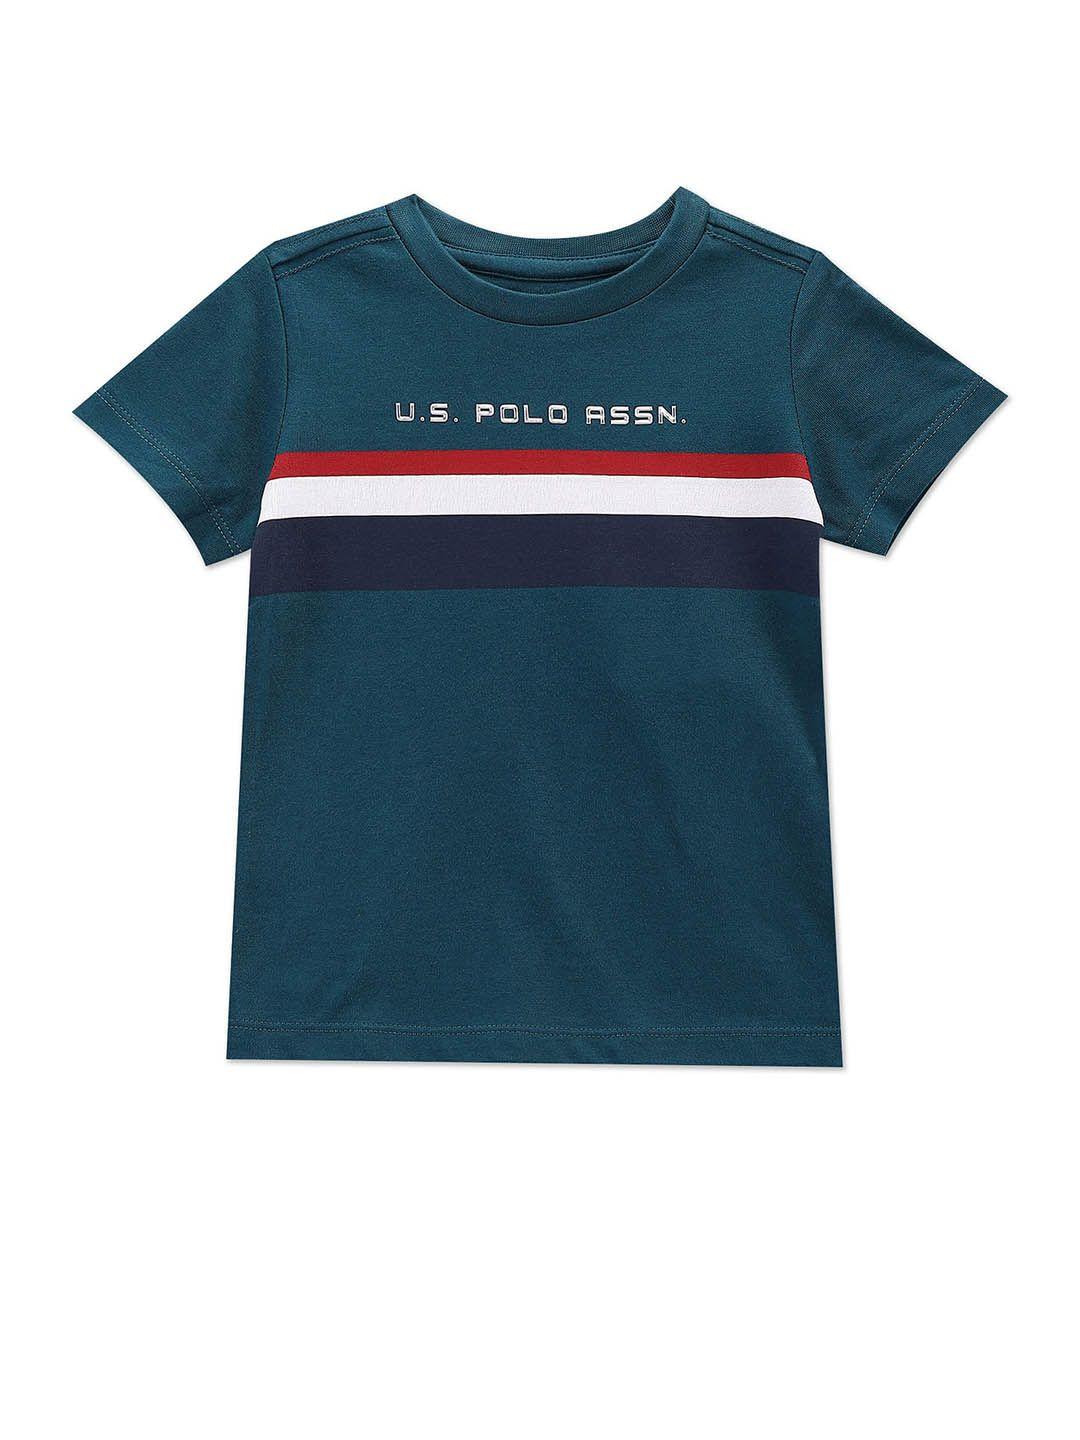 u.s. polo assn. kids boys round neck pure cotton casual t-shirt